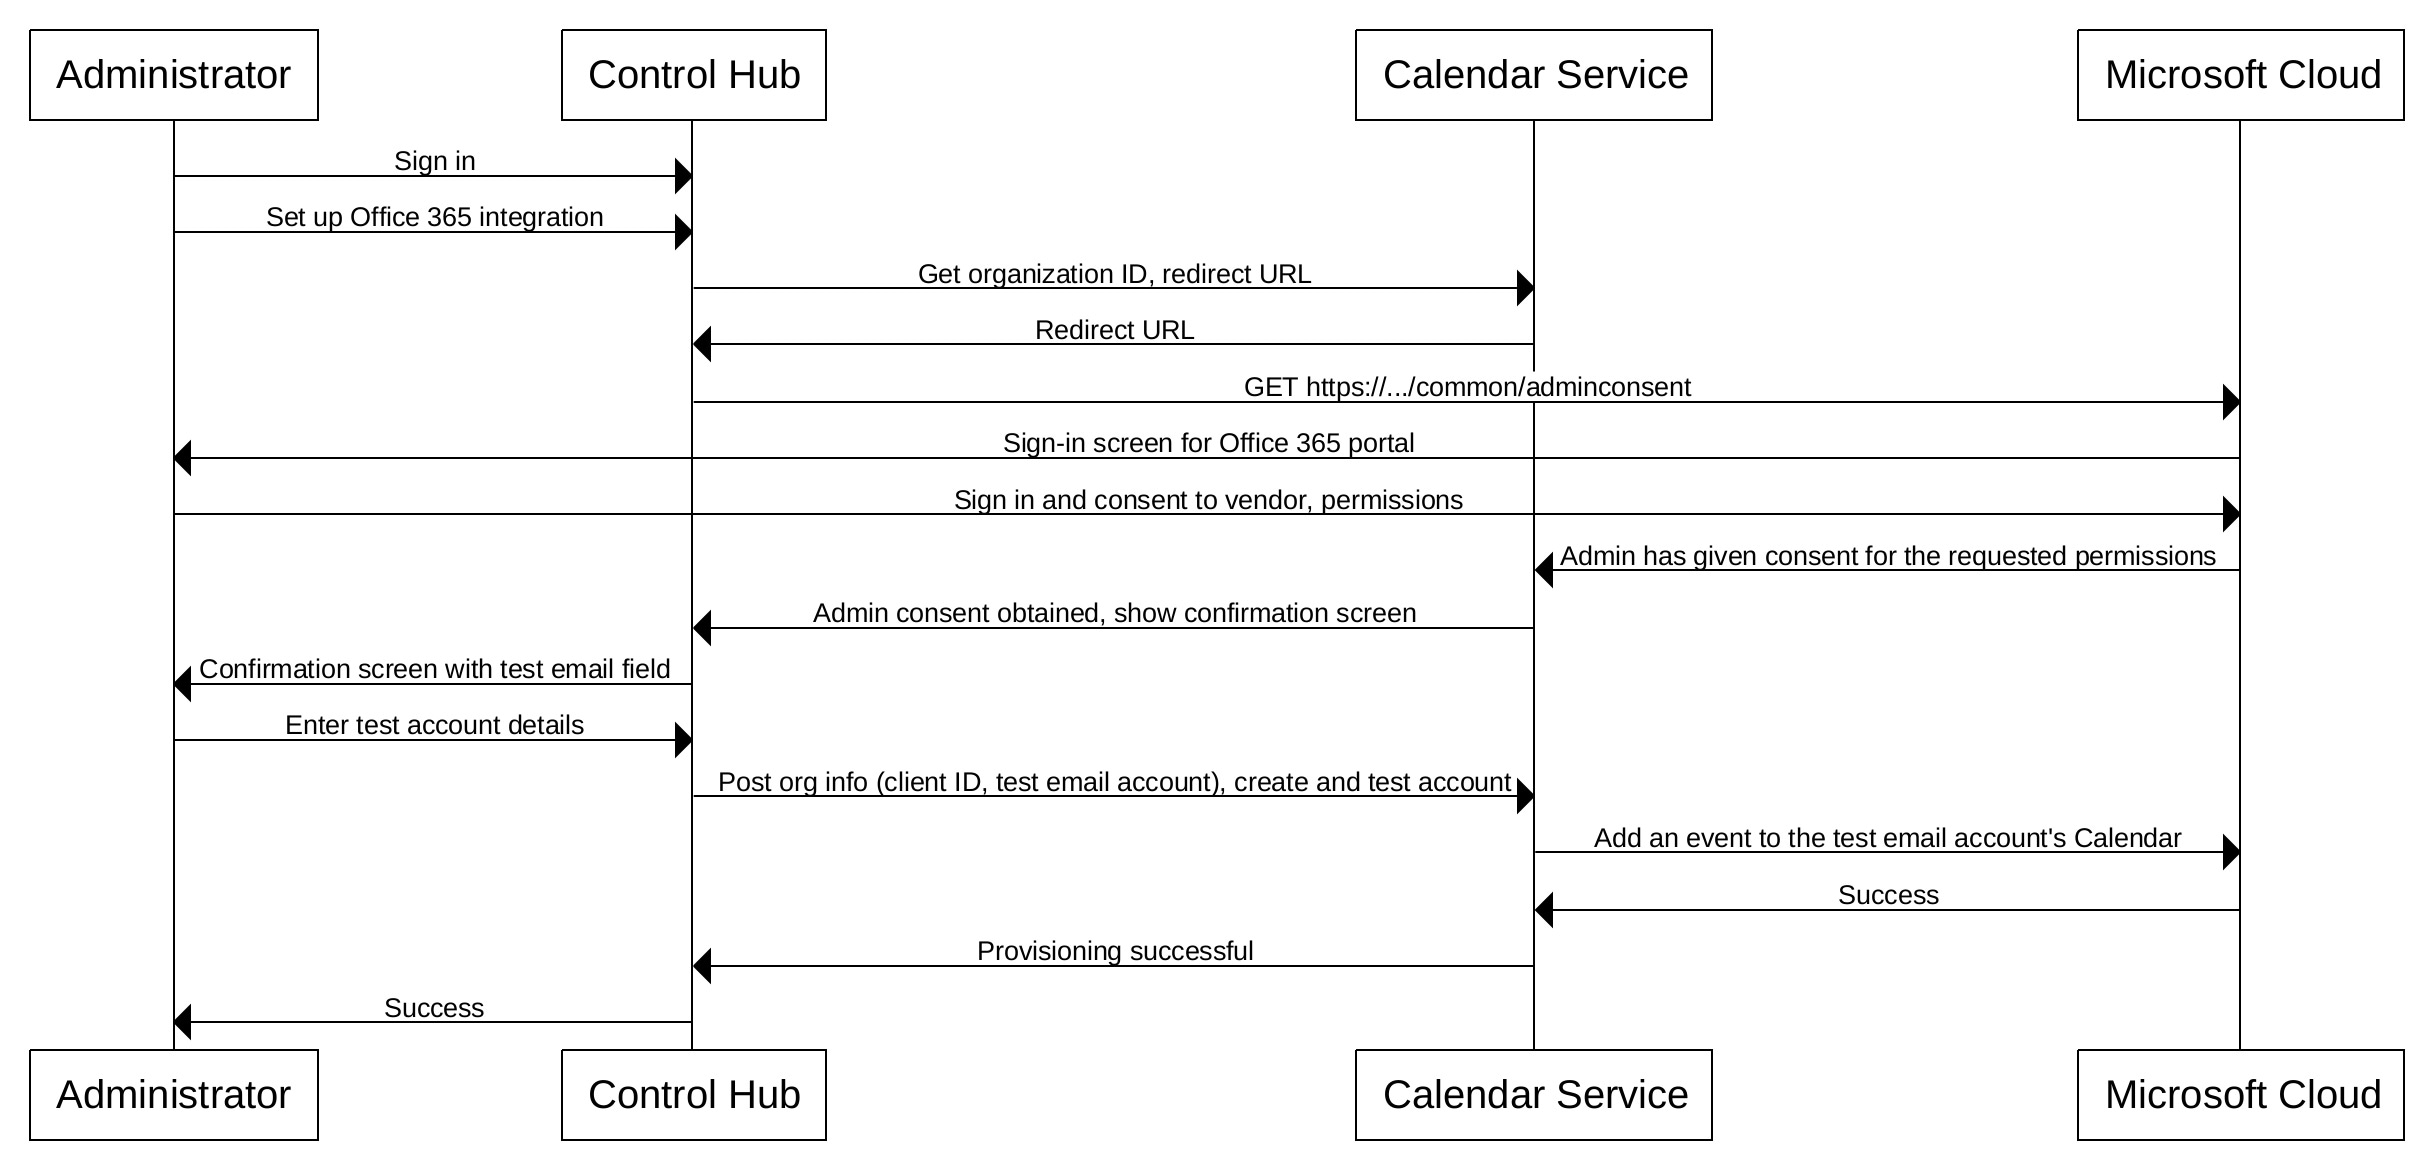 Cisco Webex Hybrid Calendar Service with Office 365 integration reference